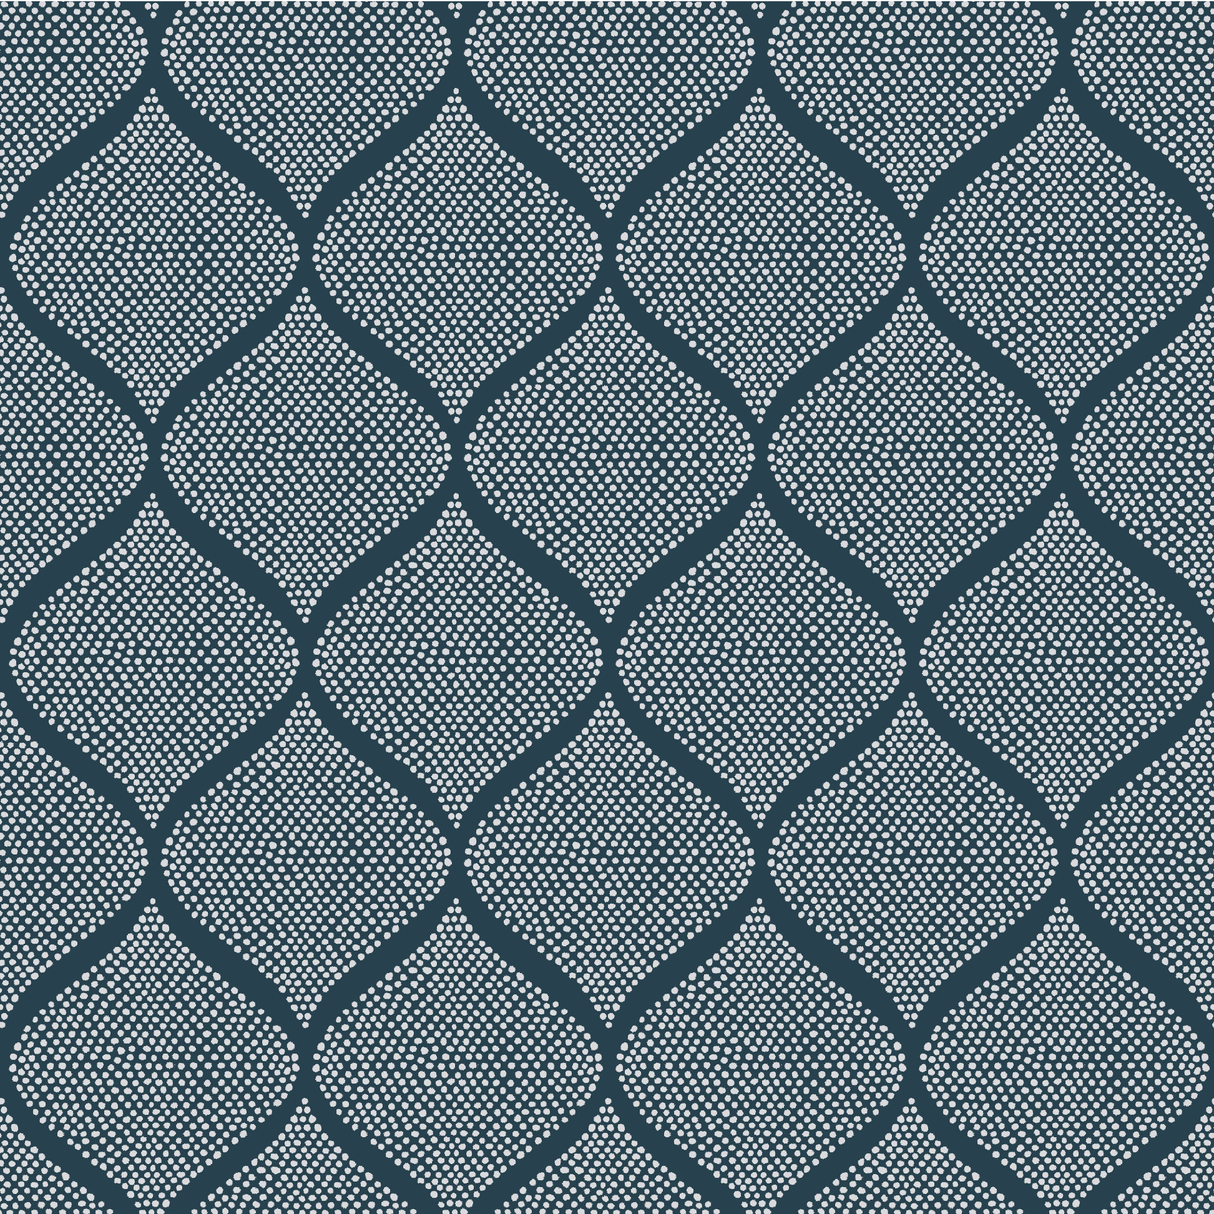 Fez Navy Blue Fabric Samples